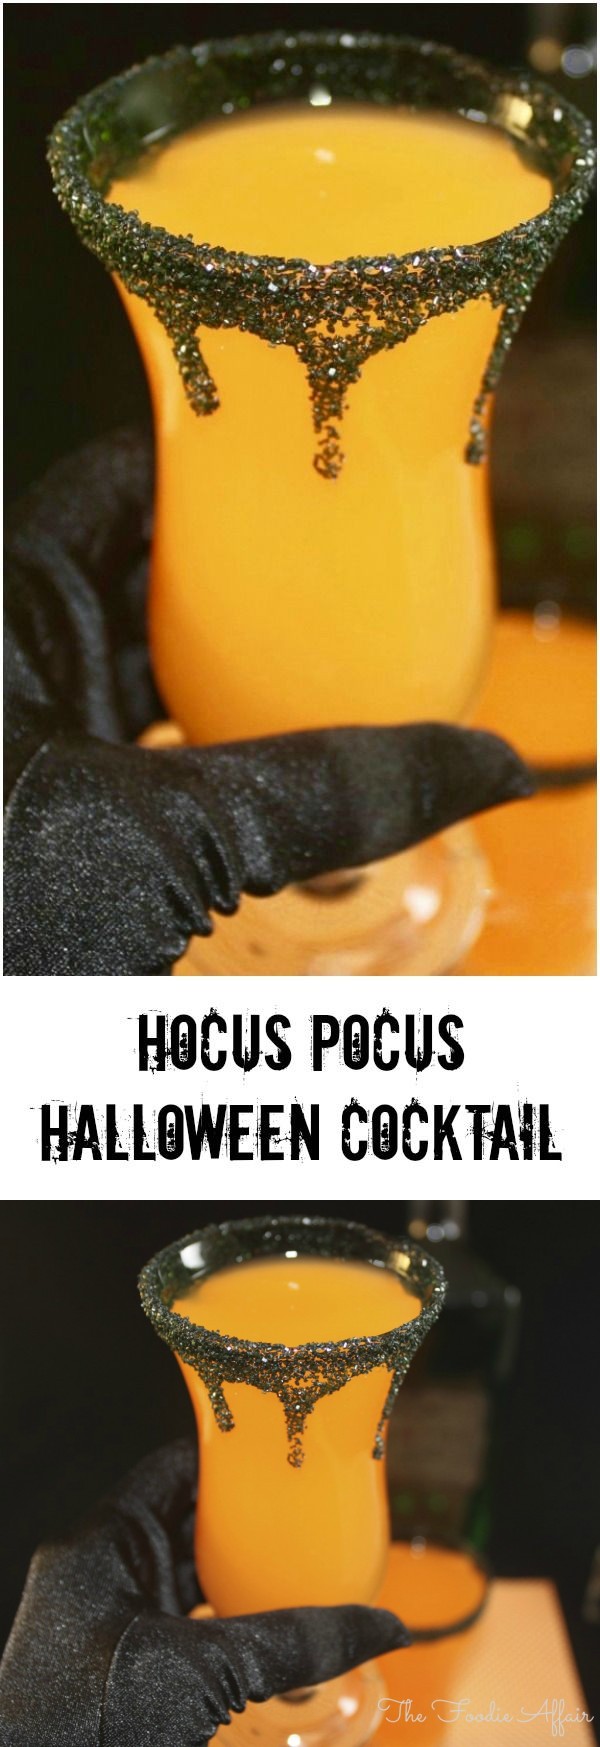 Hocus Pocus Halloween Cocktail